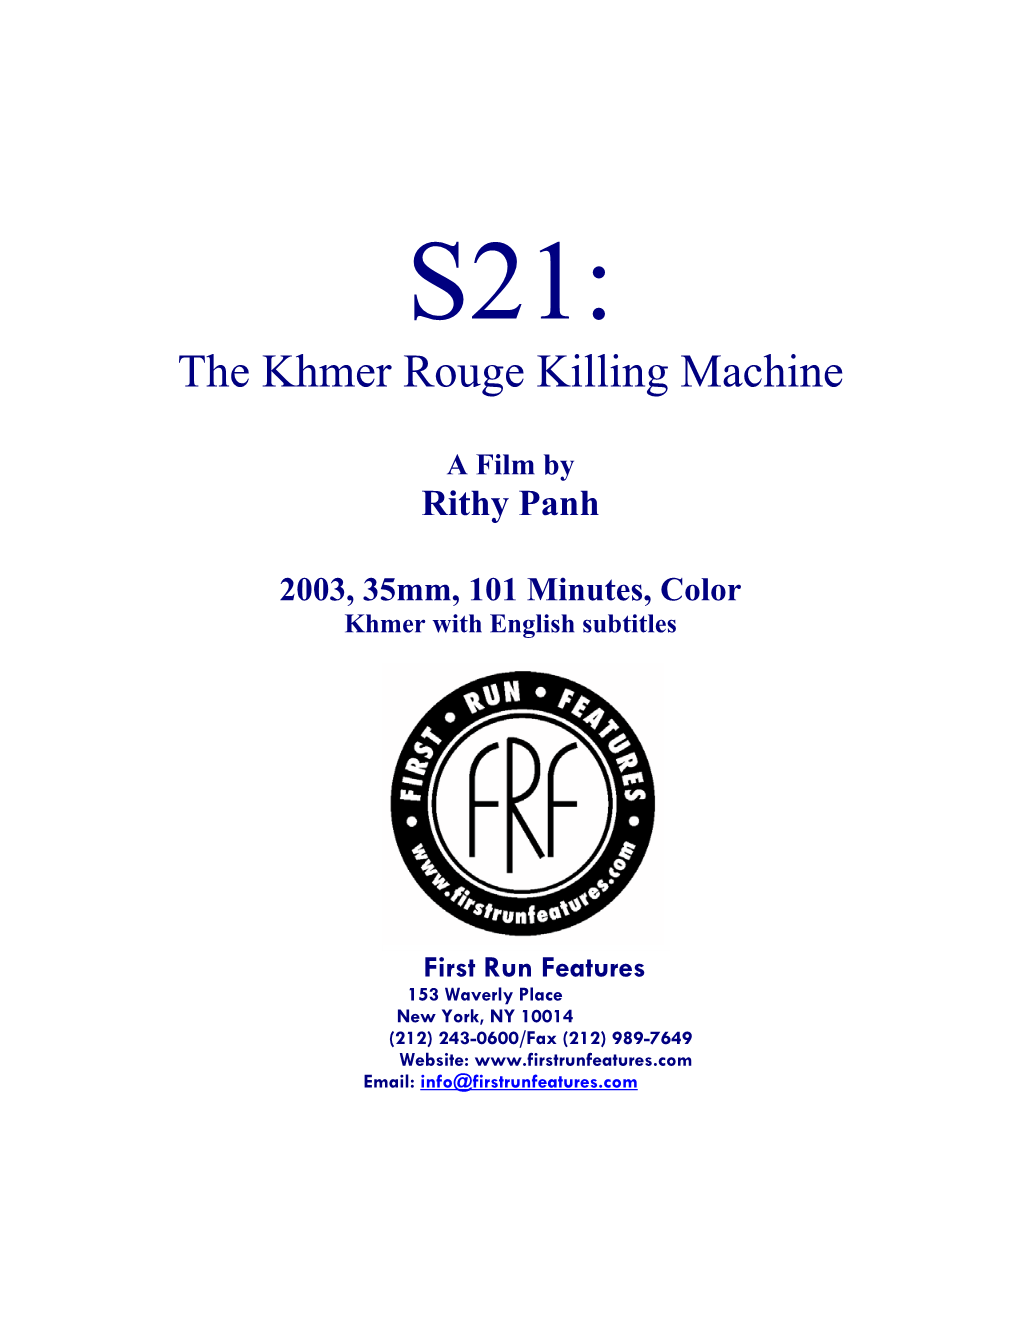 The Khmer Rouge Killing Machine